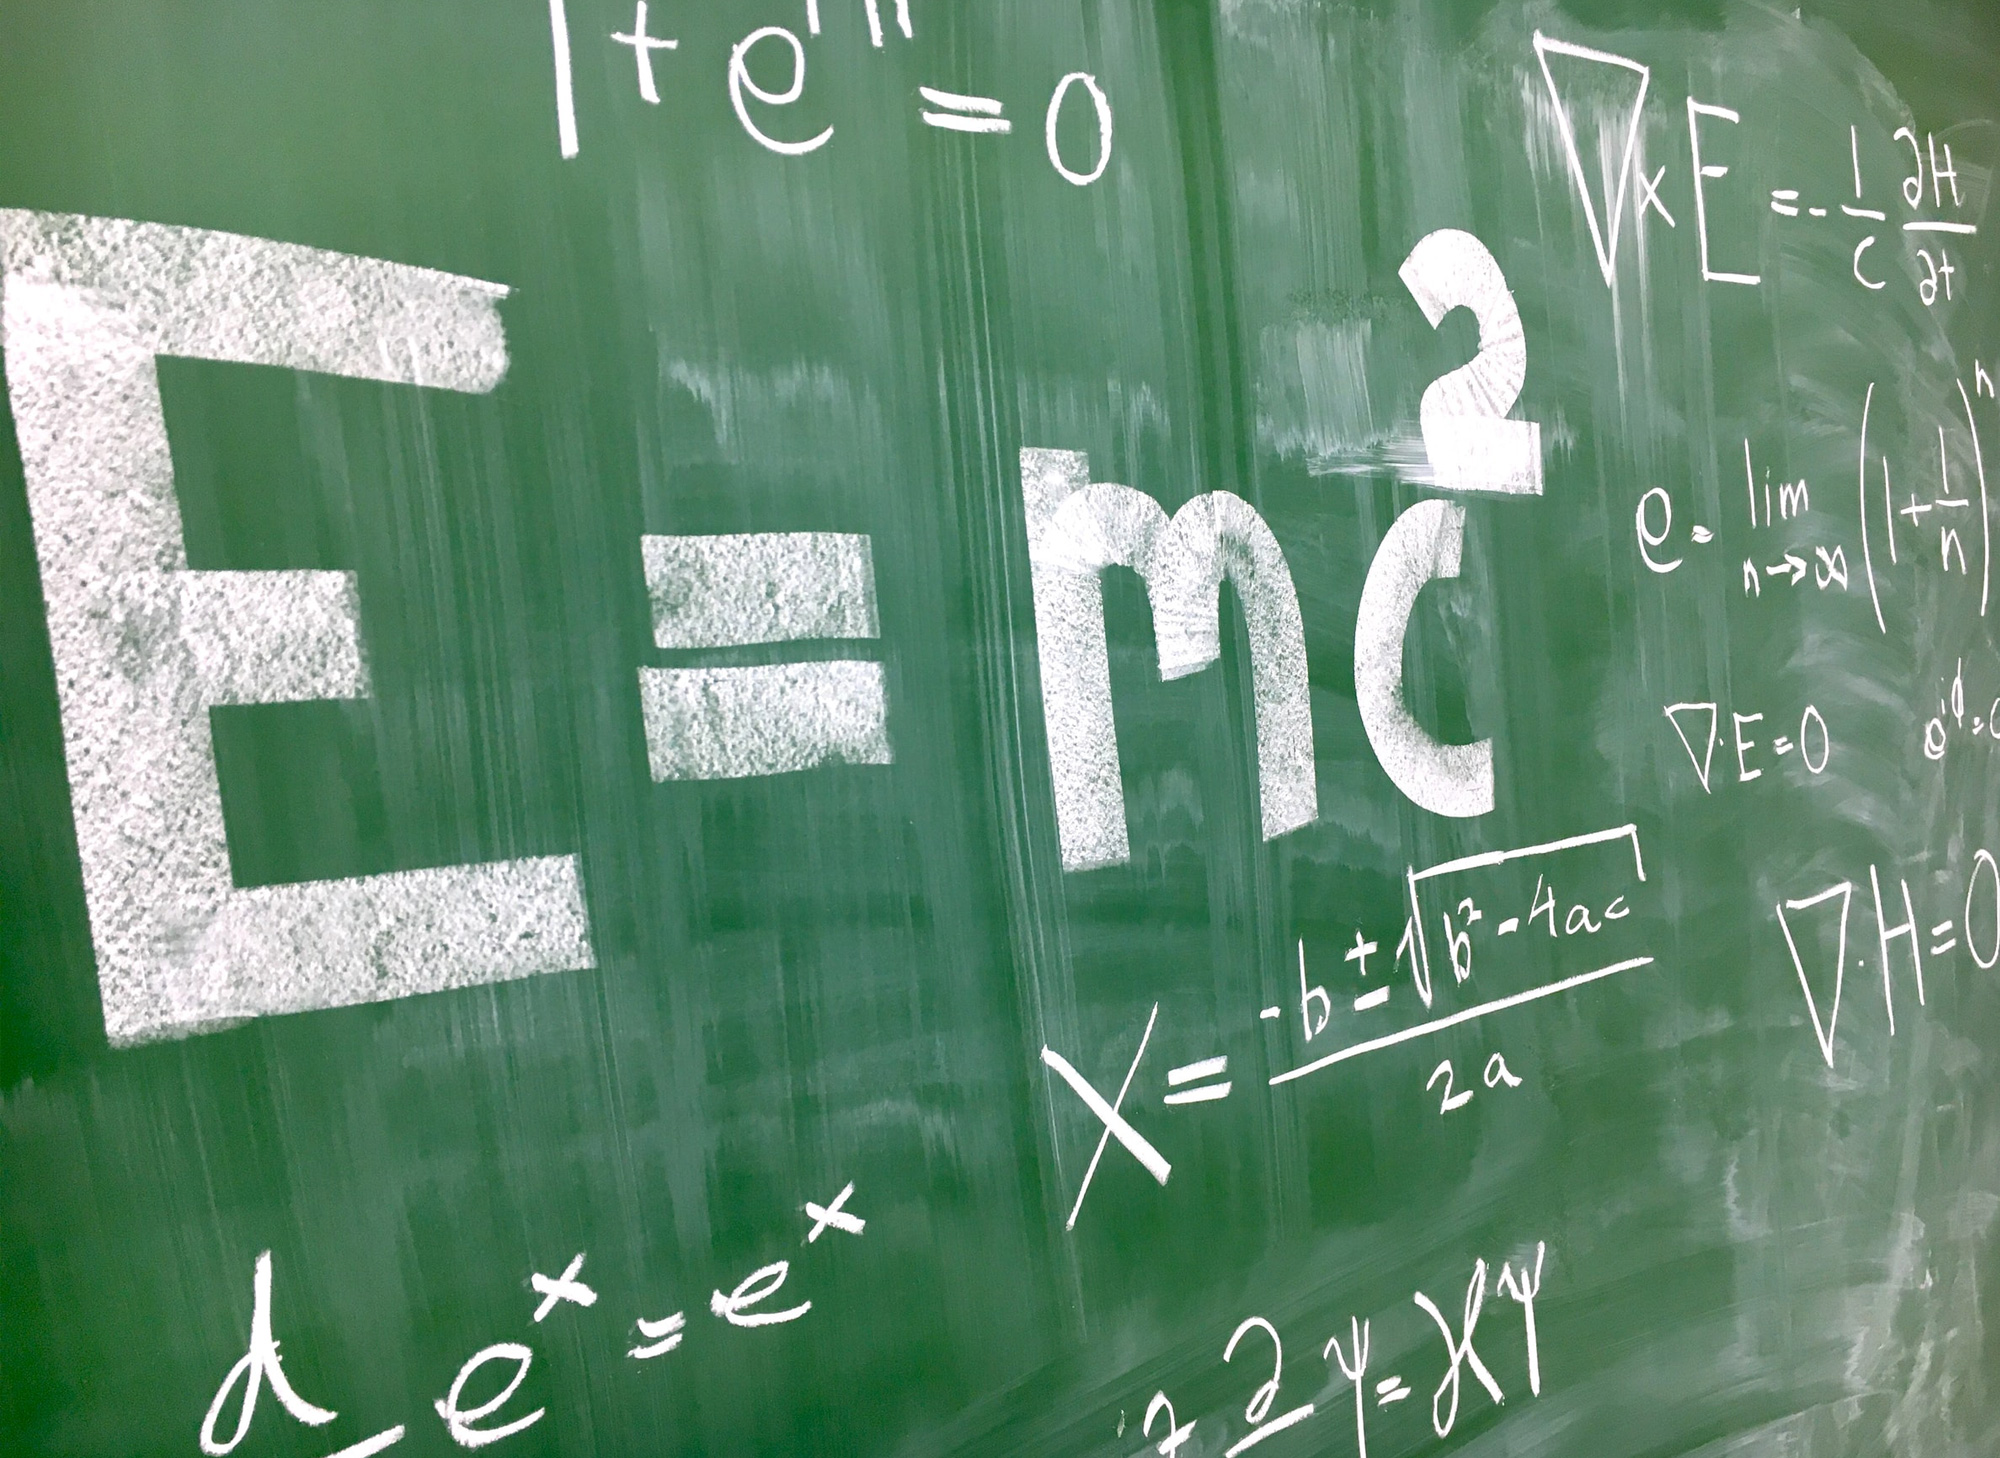 Physics laws on the blackboard